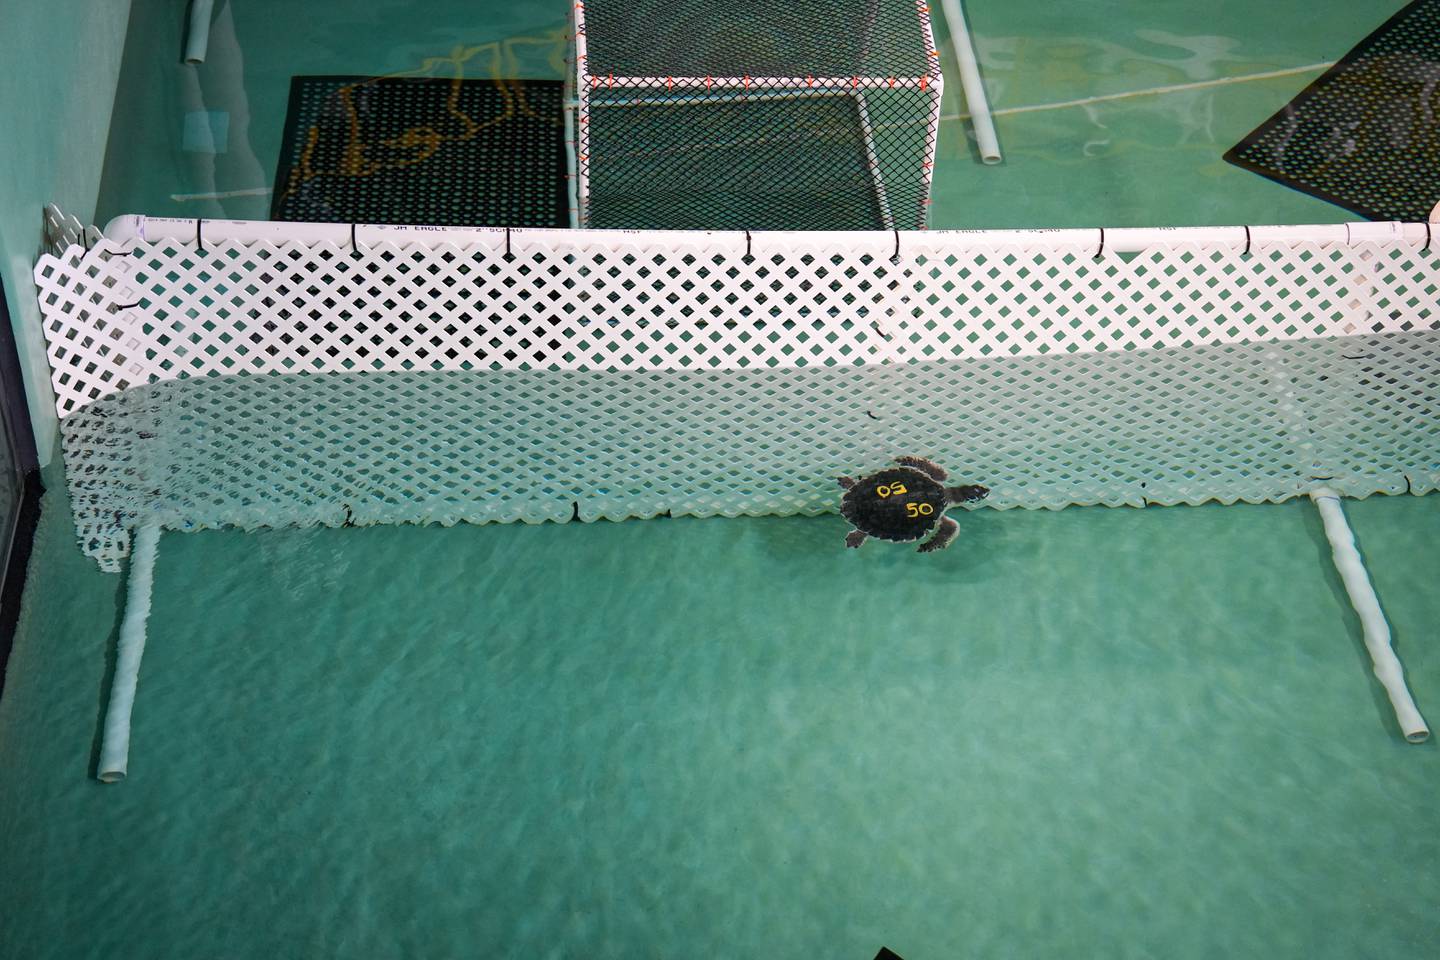 A kemp's ridley sea turtle undergoing rehabilitation at the National Aquarium.